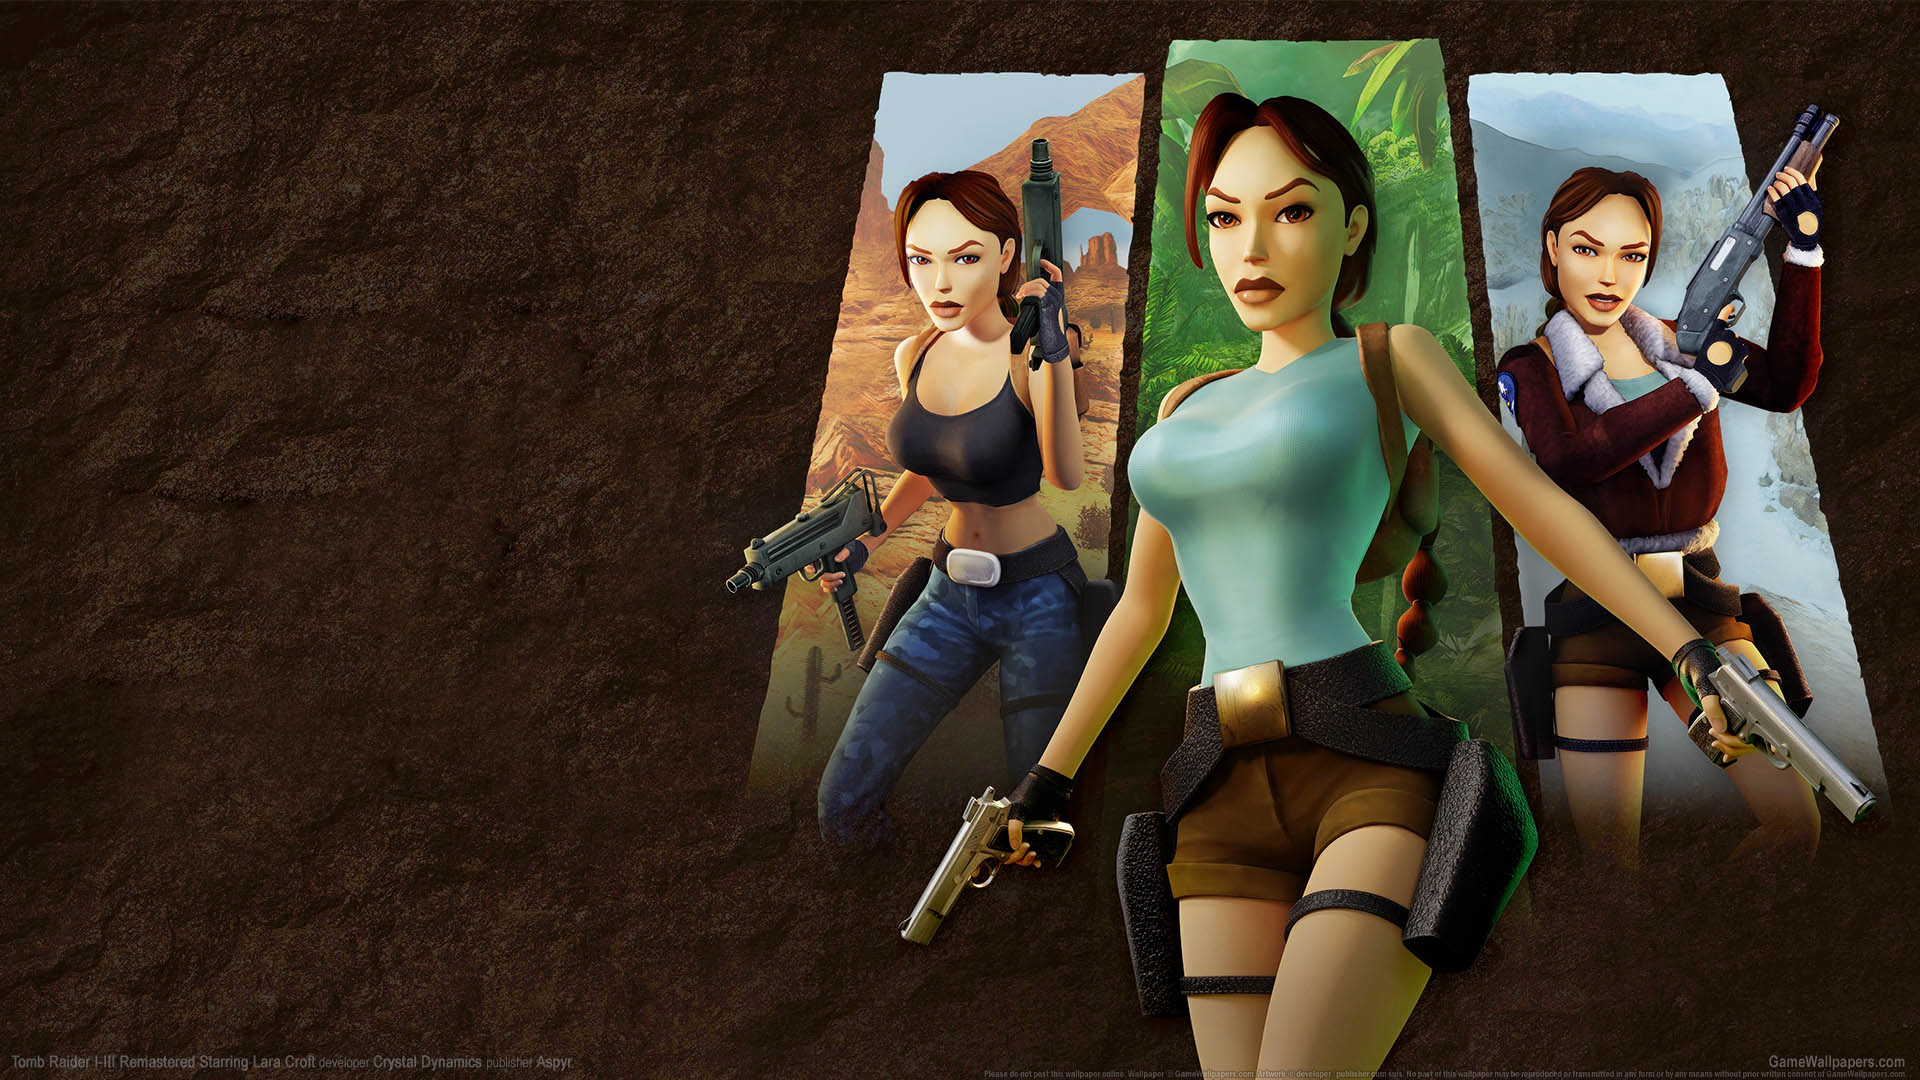 Tomb Raider I-III Remastered Starring Lara Croft Hintergrundbild 01 1920x1080